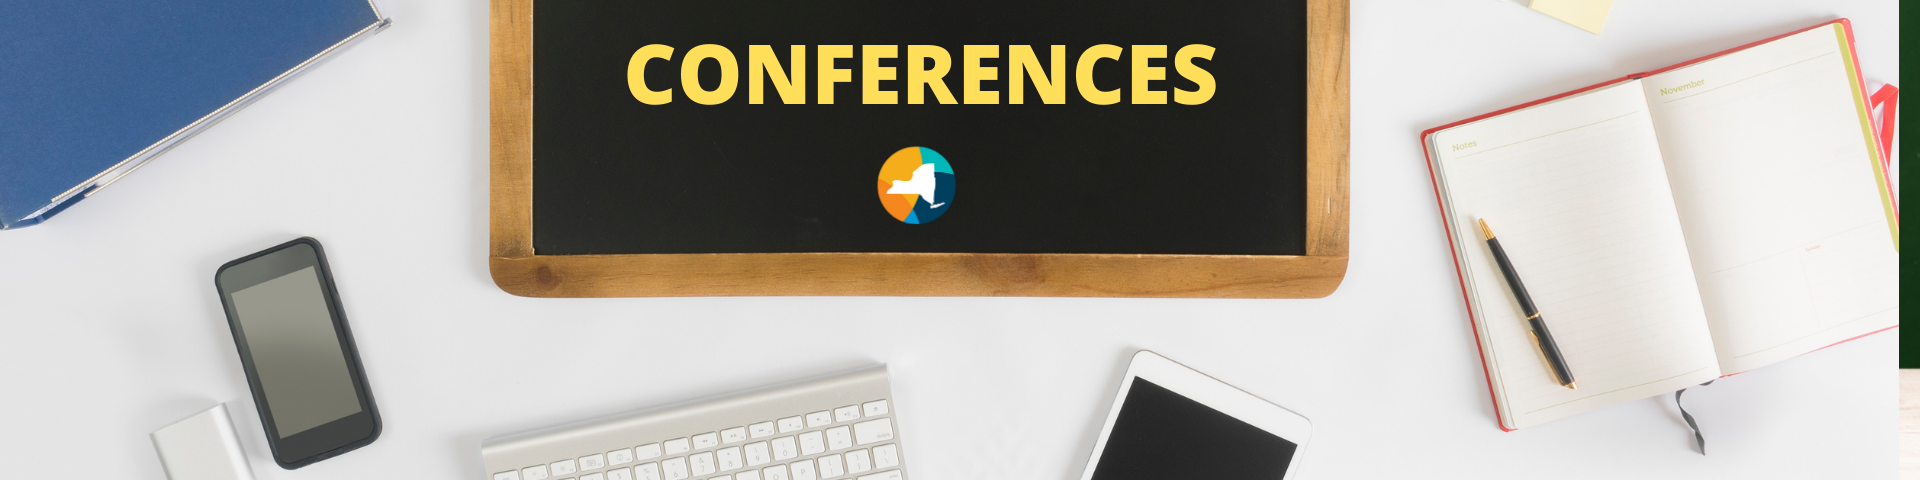 Conferences banner